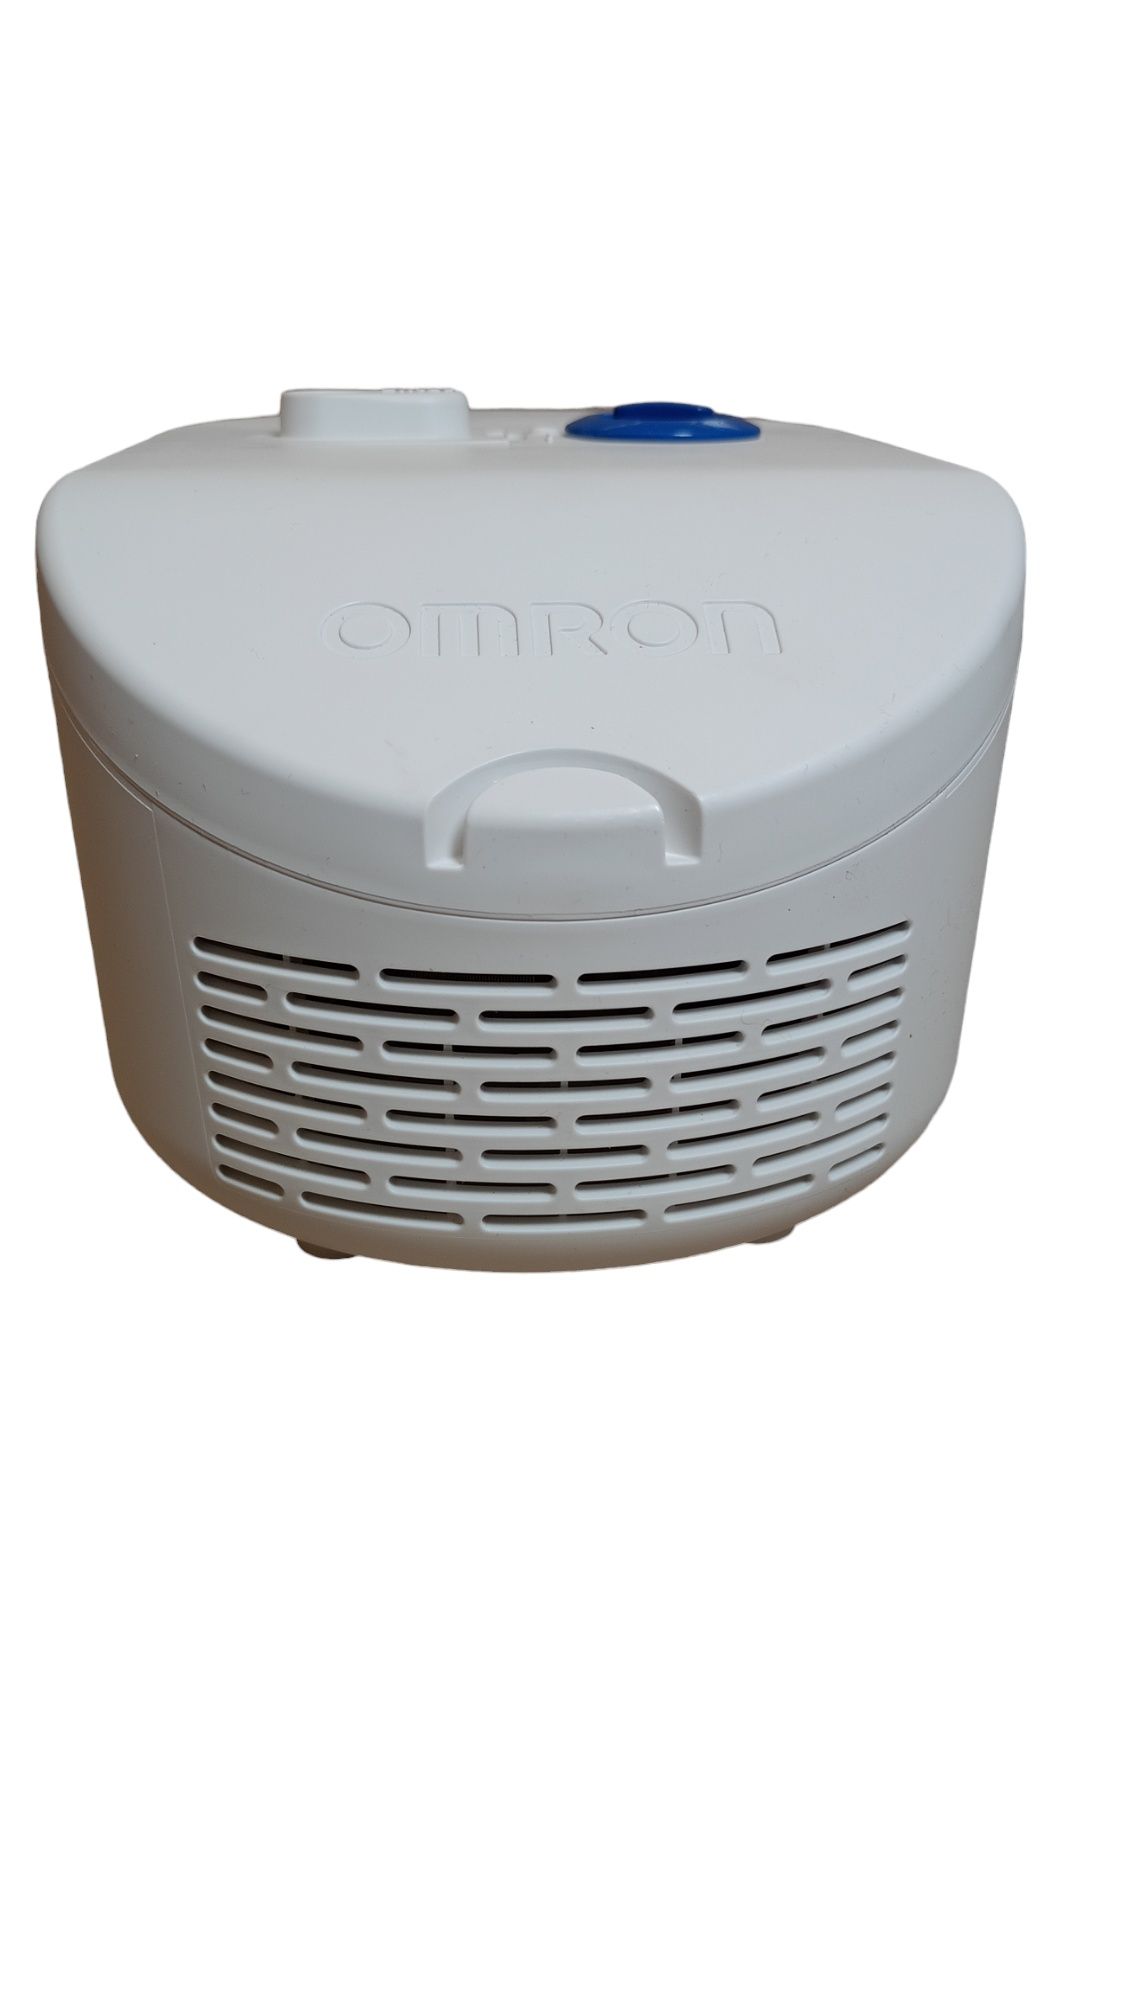 Inhalator Omron 2W1